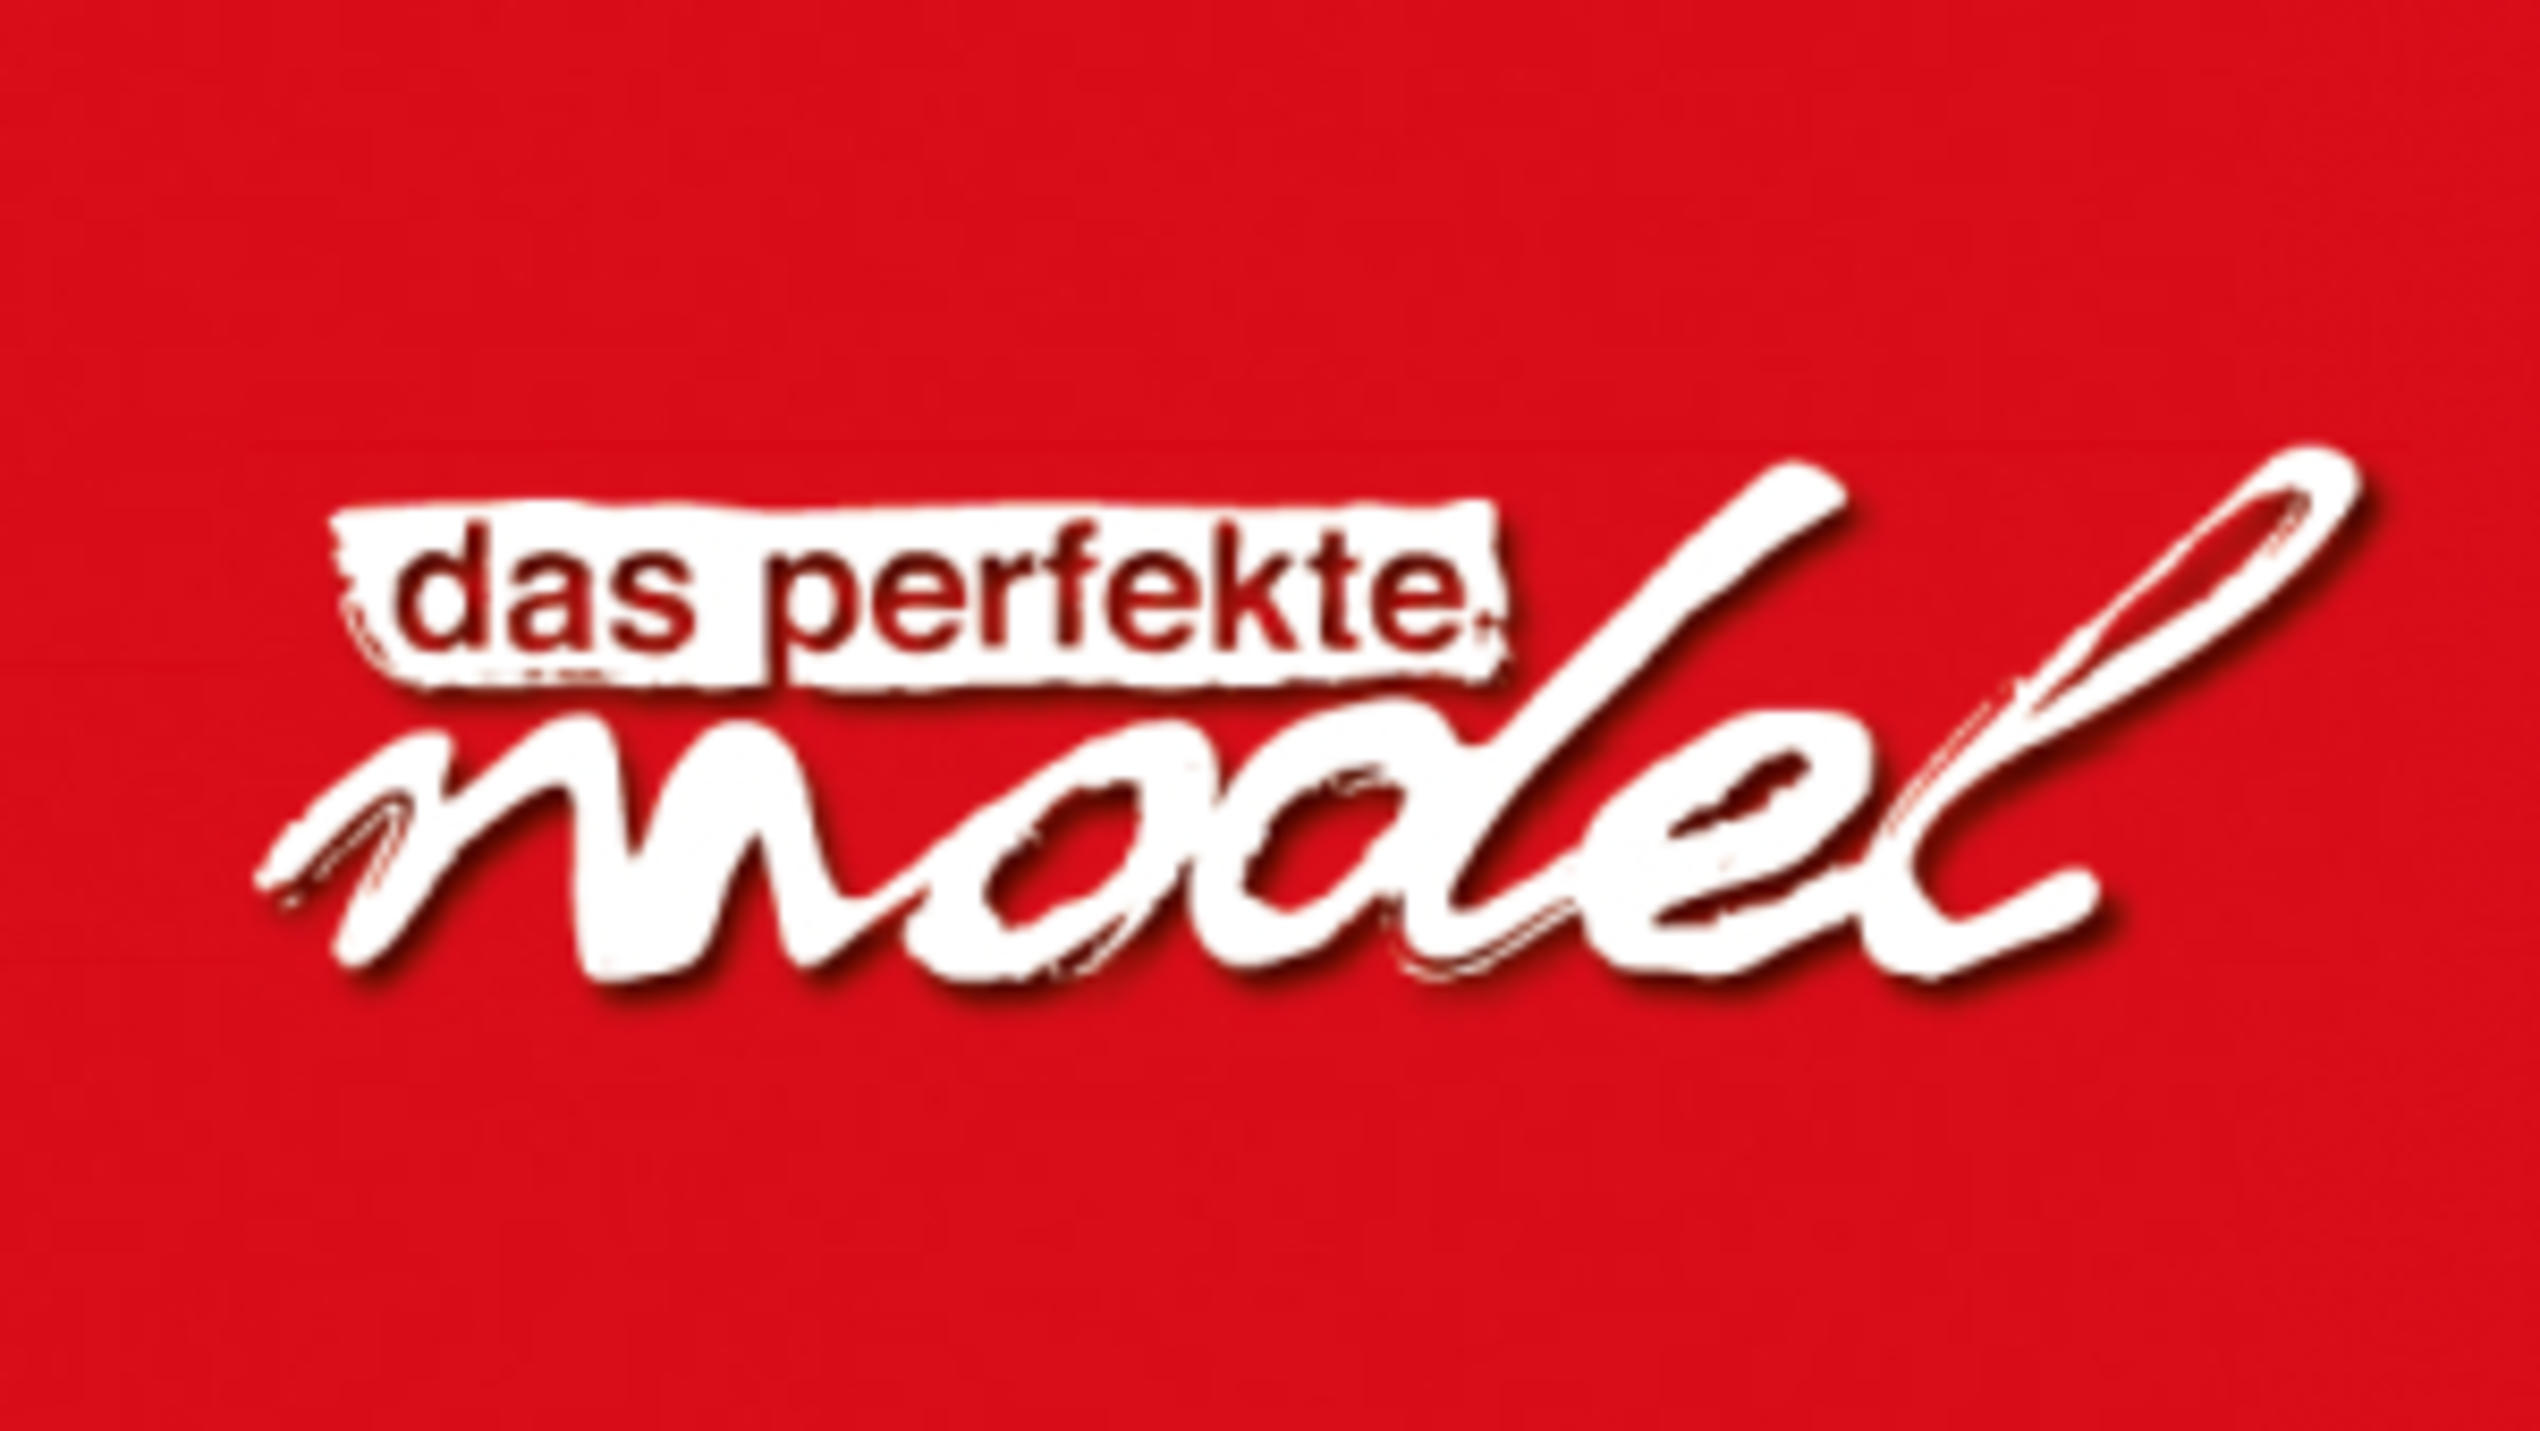 Das perfekte Model 2012 - unsere Partner